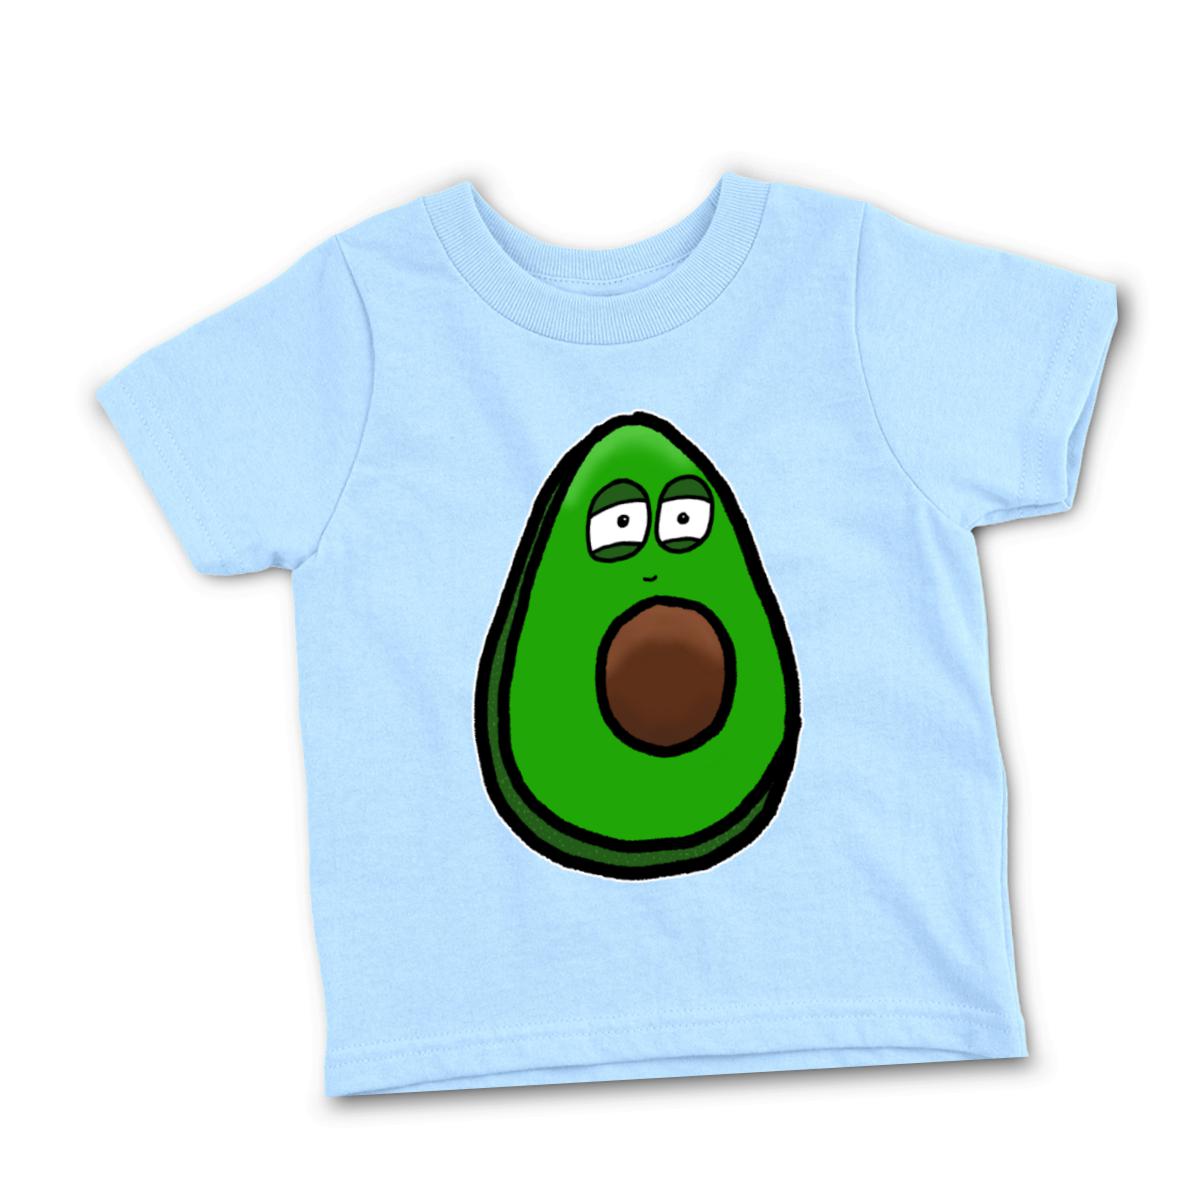 Avocado Toddler Tee 4T light-blue